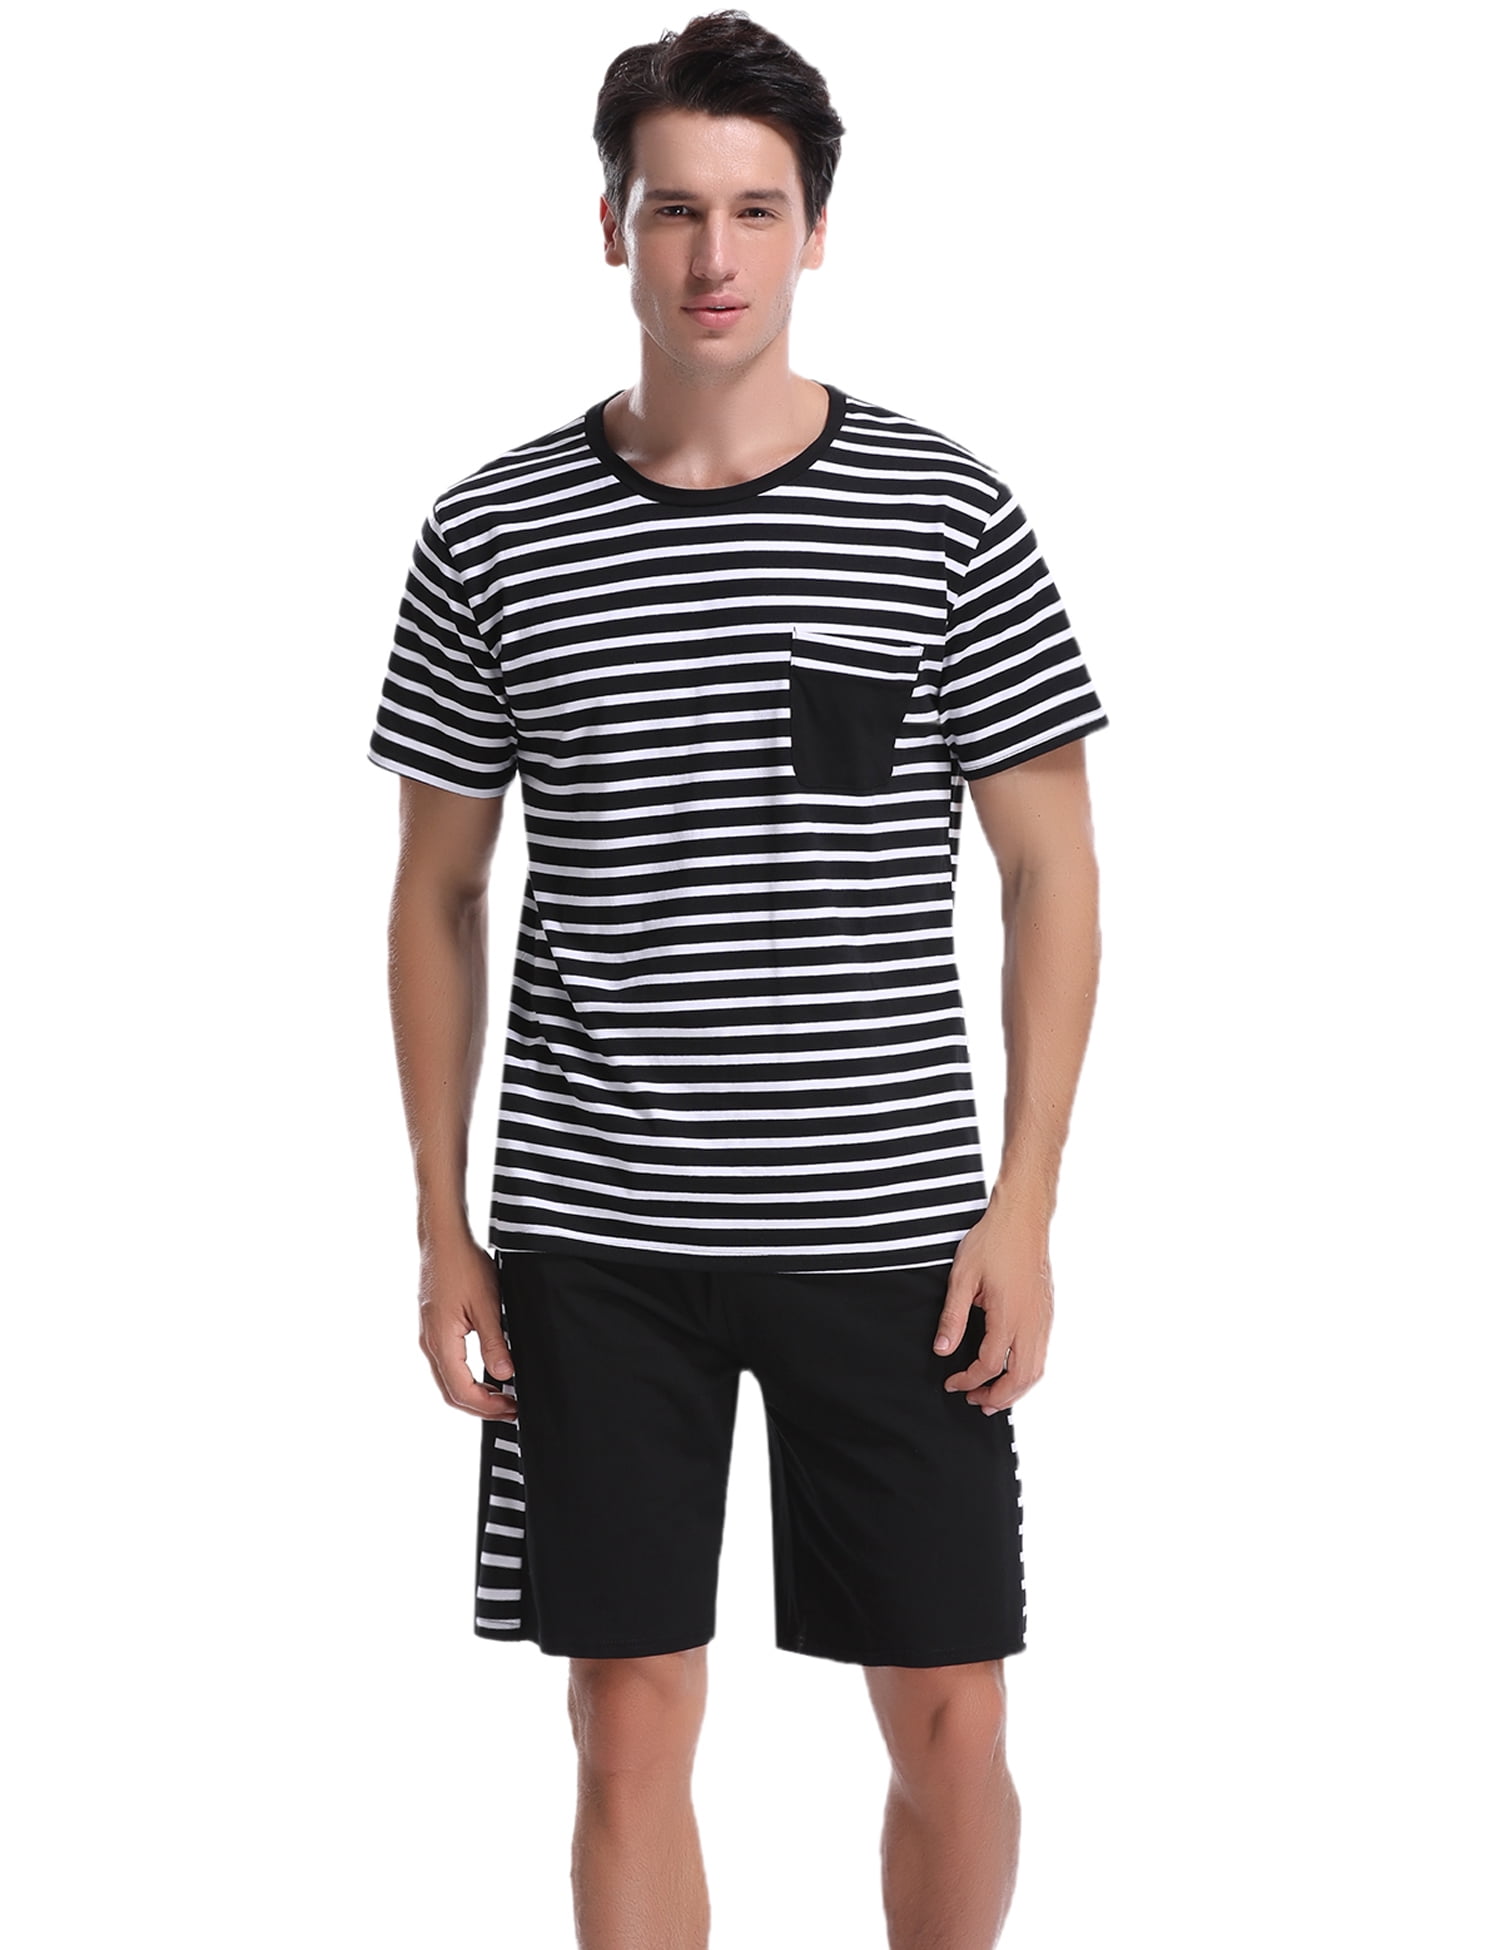 S-XXL iClosam Men's Pajama Set Summer Short Sleeve Lounge Cotton Classic Striped Shorts & Shirt Sleepwear 